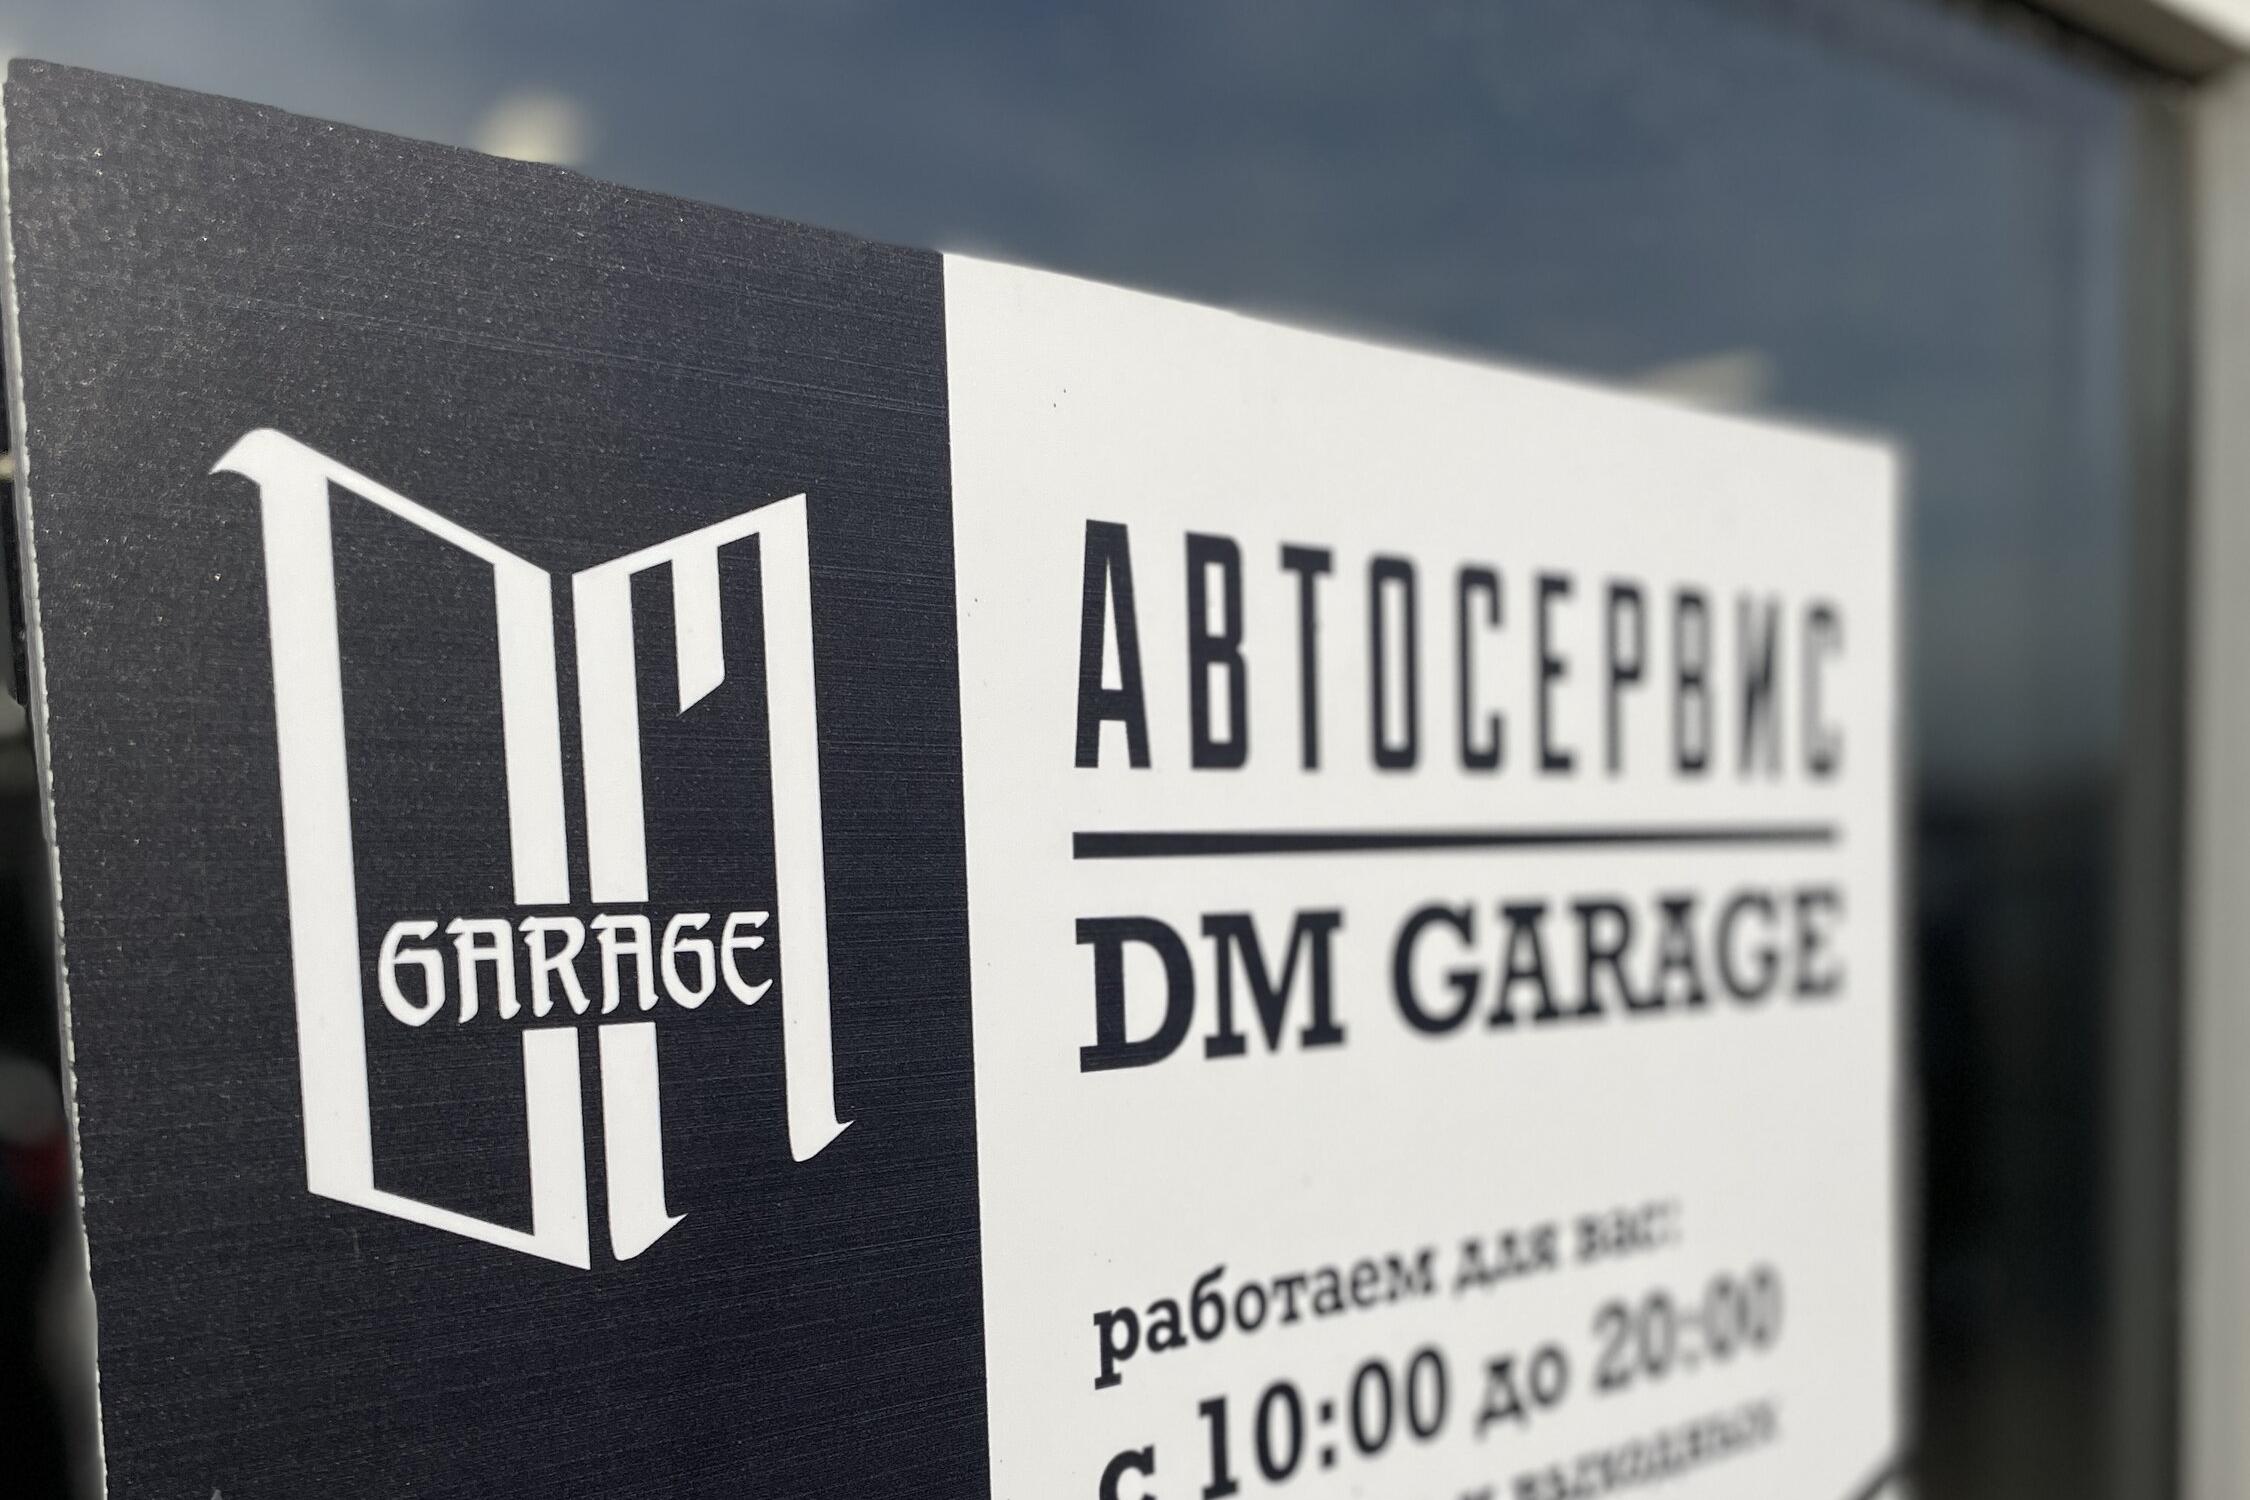 Дм сервис. Автосервис DM service. DM service. DM Garage.